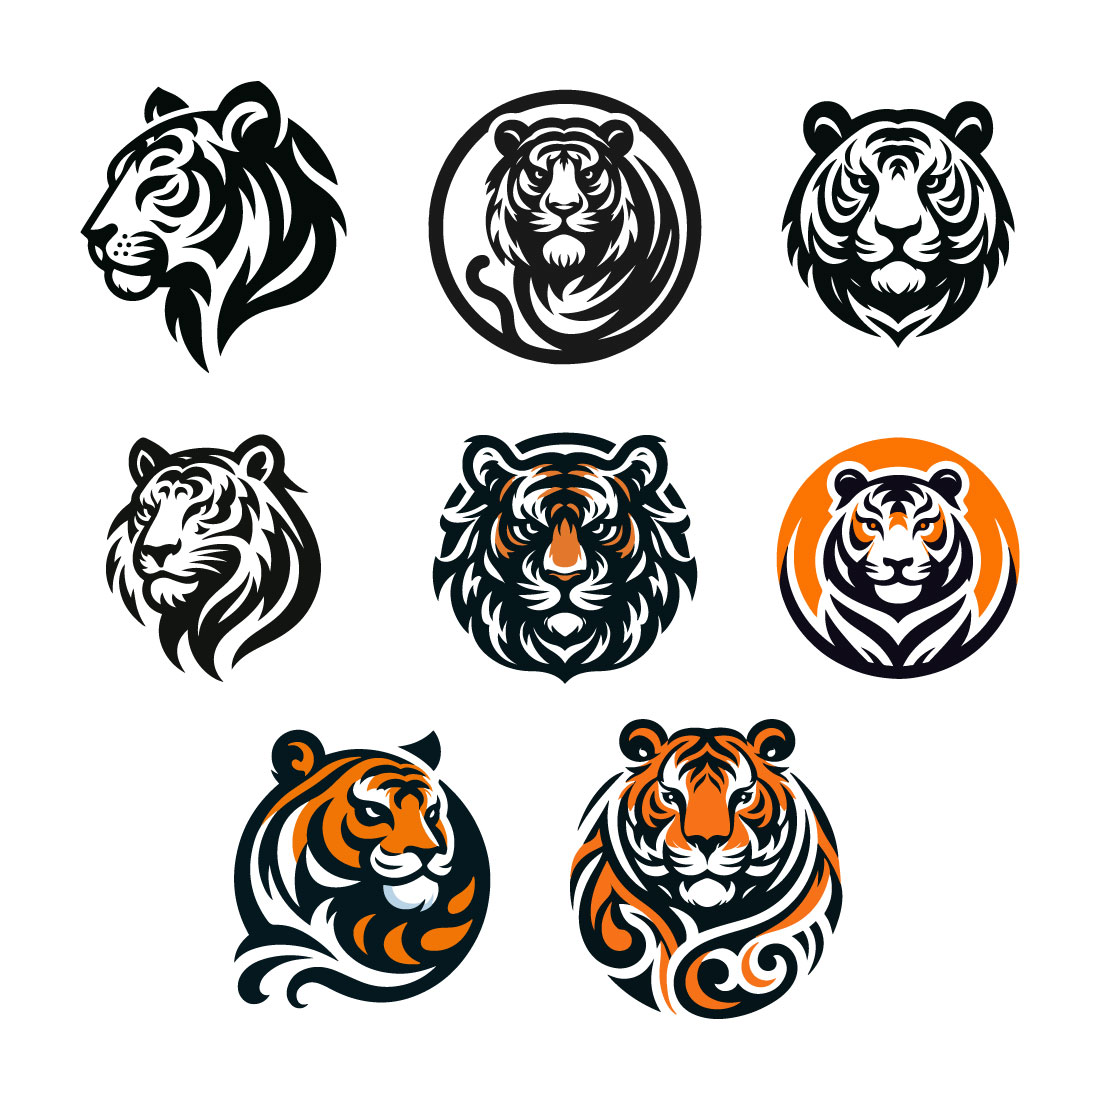 8 Tiger Logos Vector Illustration cover image.